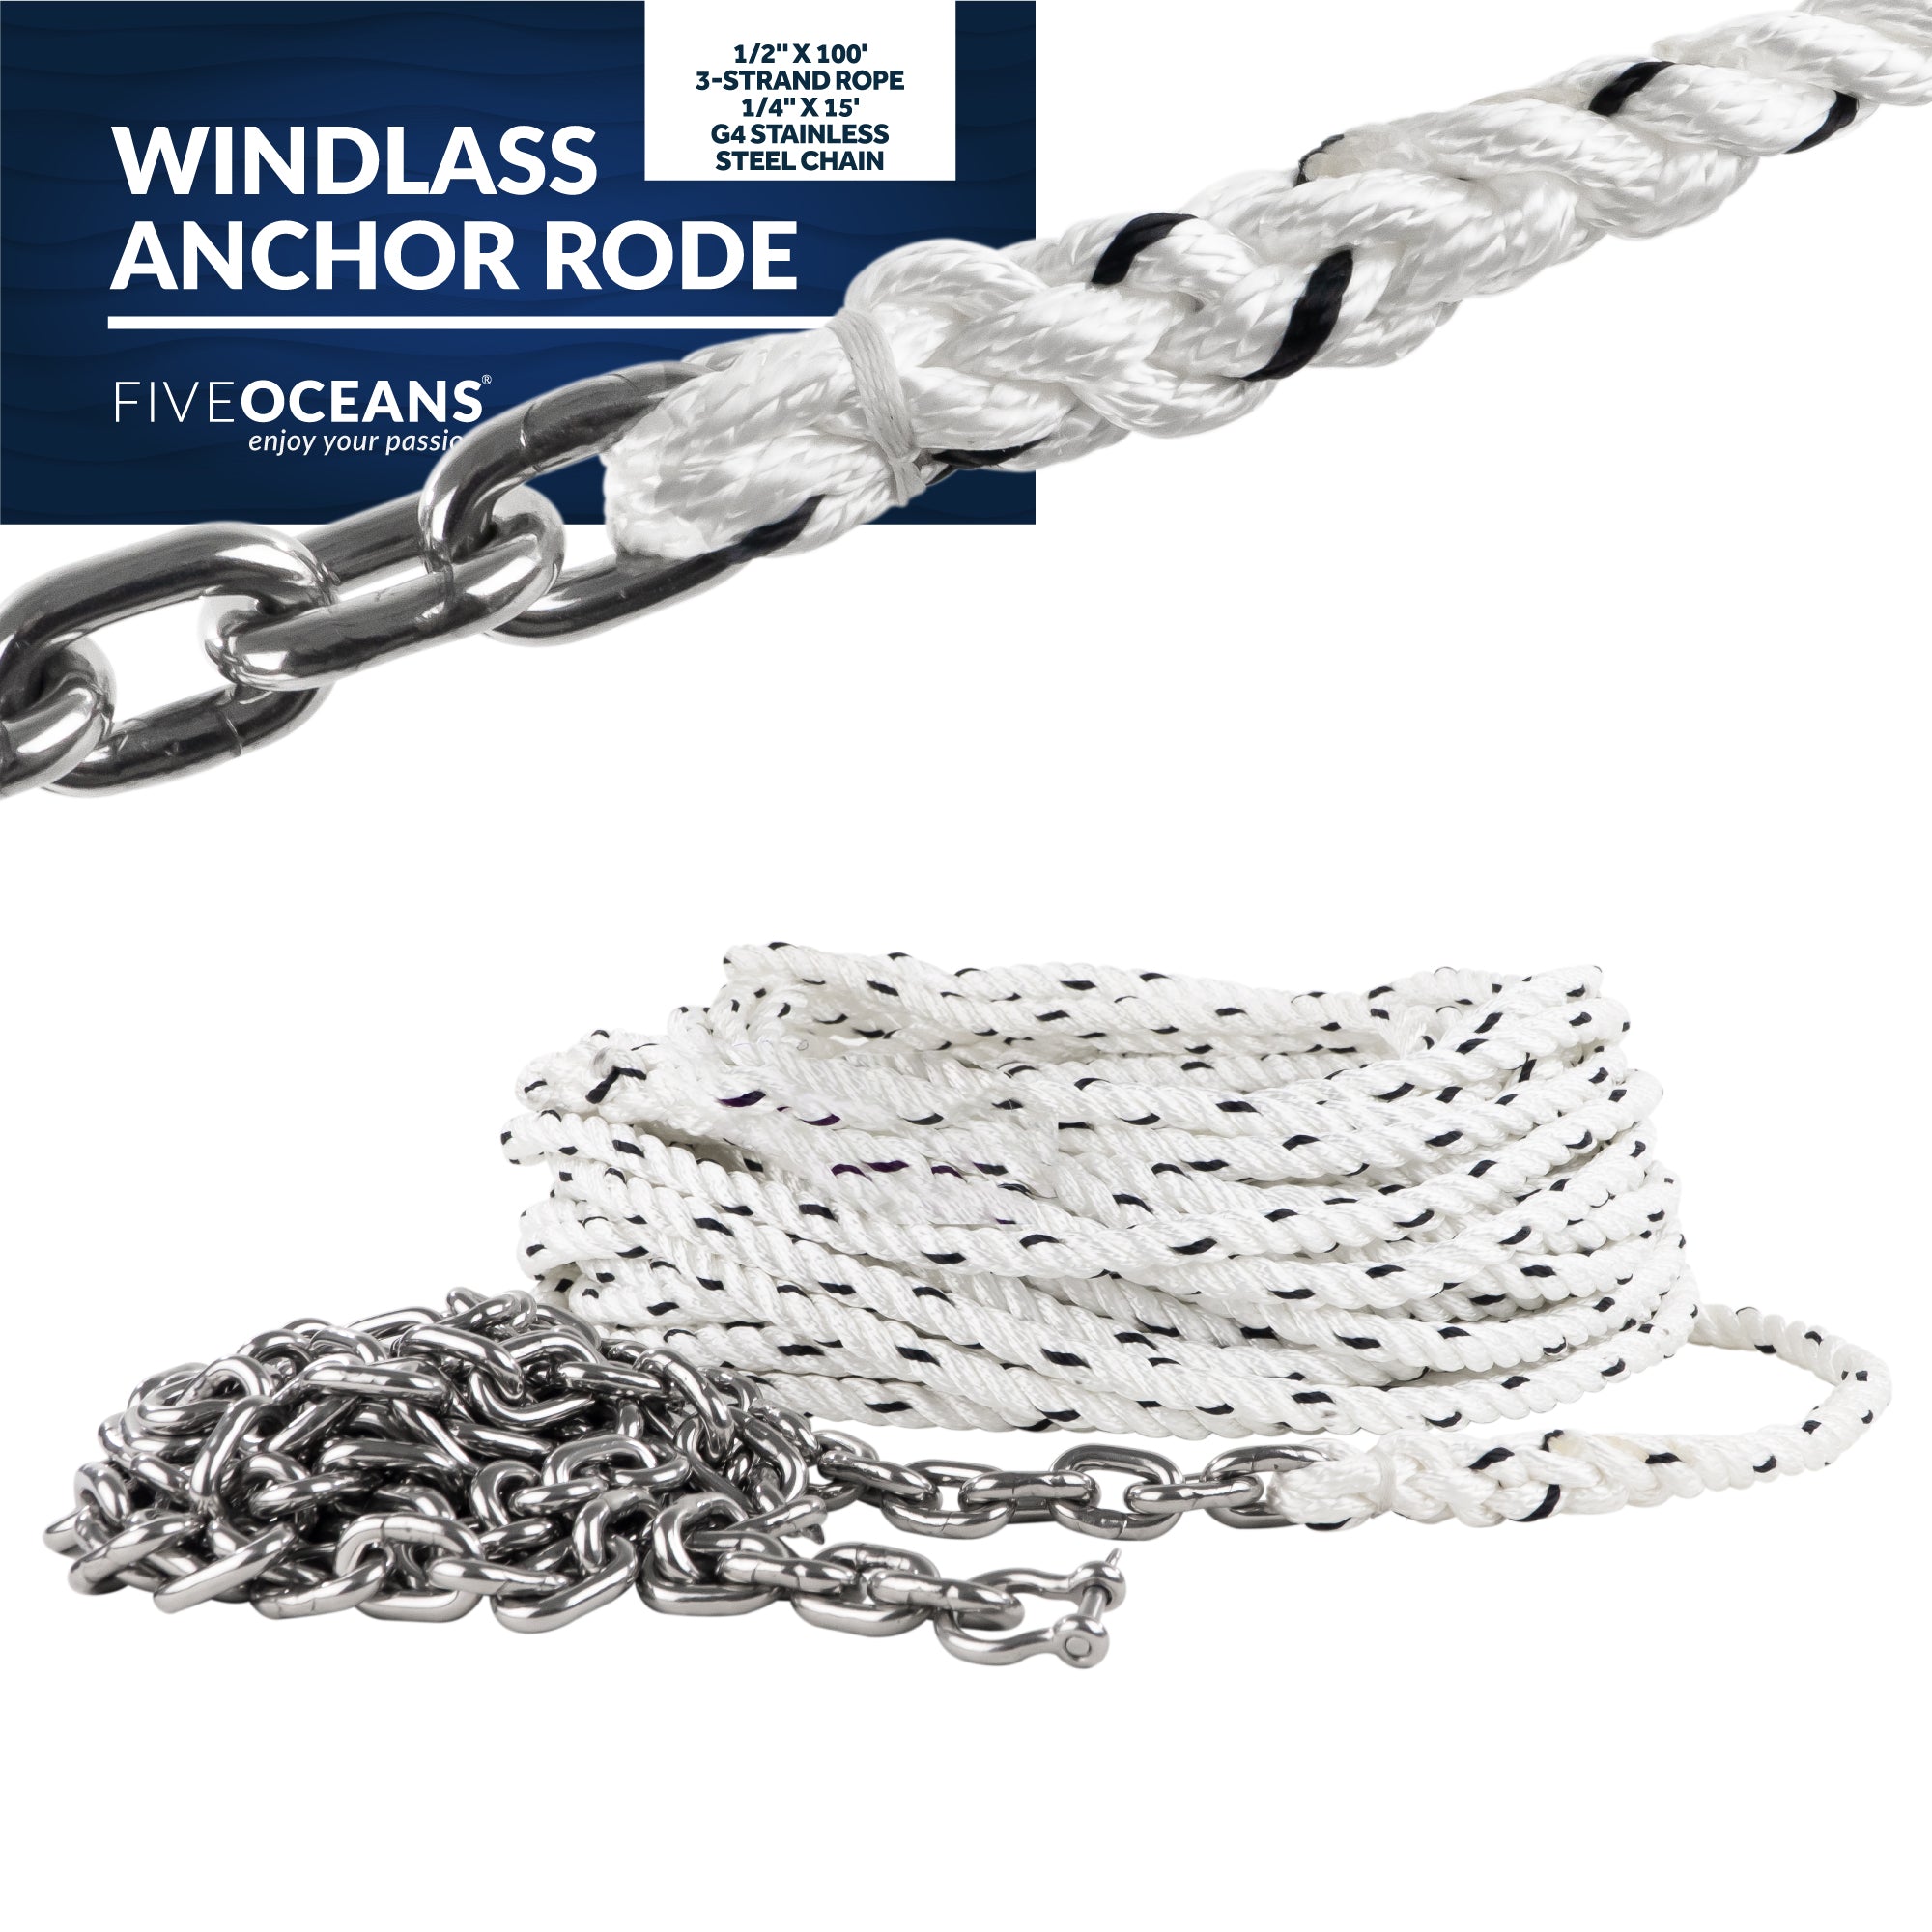 Windlass Anchor Rode, 1/2" x 100' Nylon 3-Strand Rope, 1/4" x 15' G4 Stainless Steel Chain - FO4579